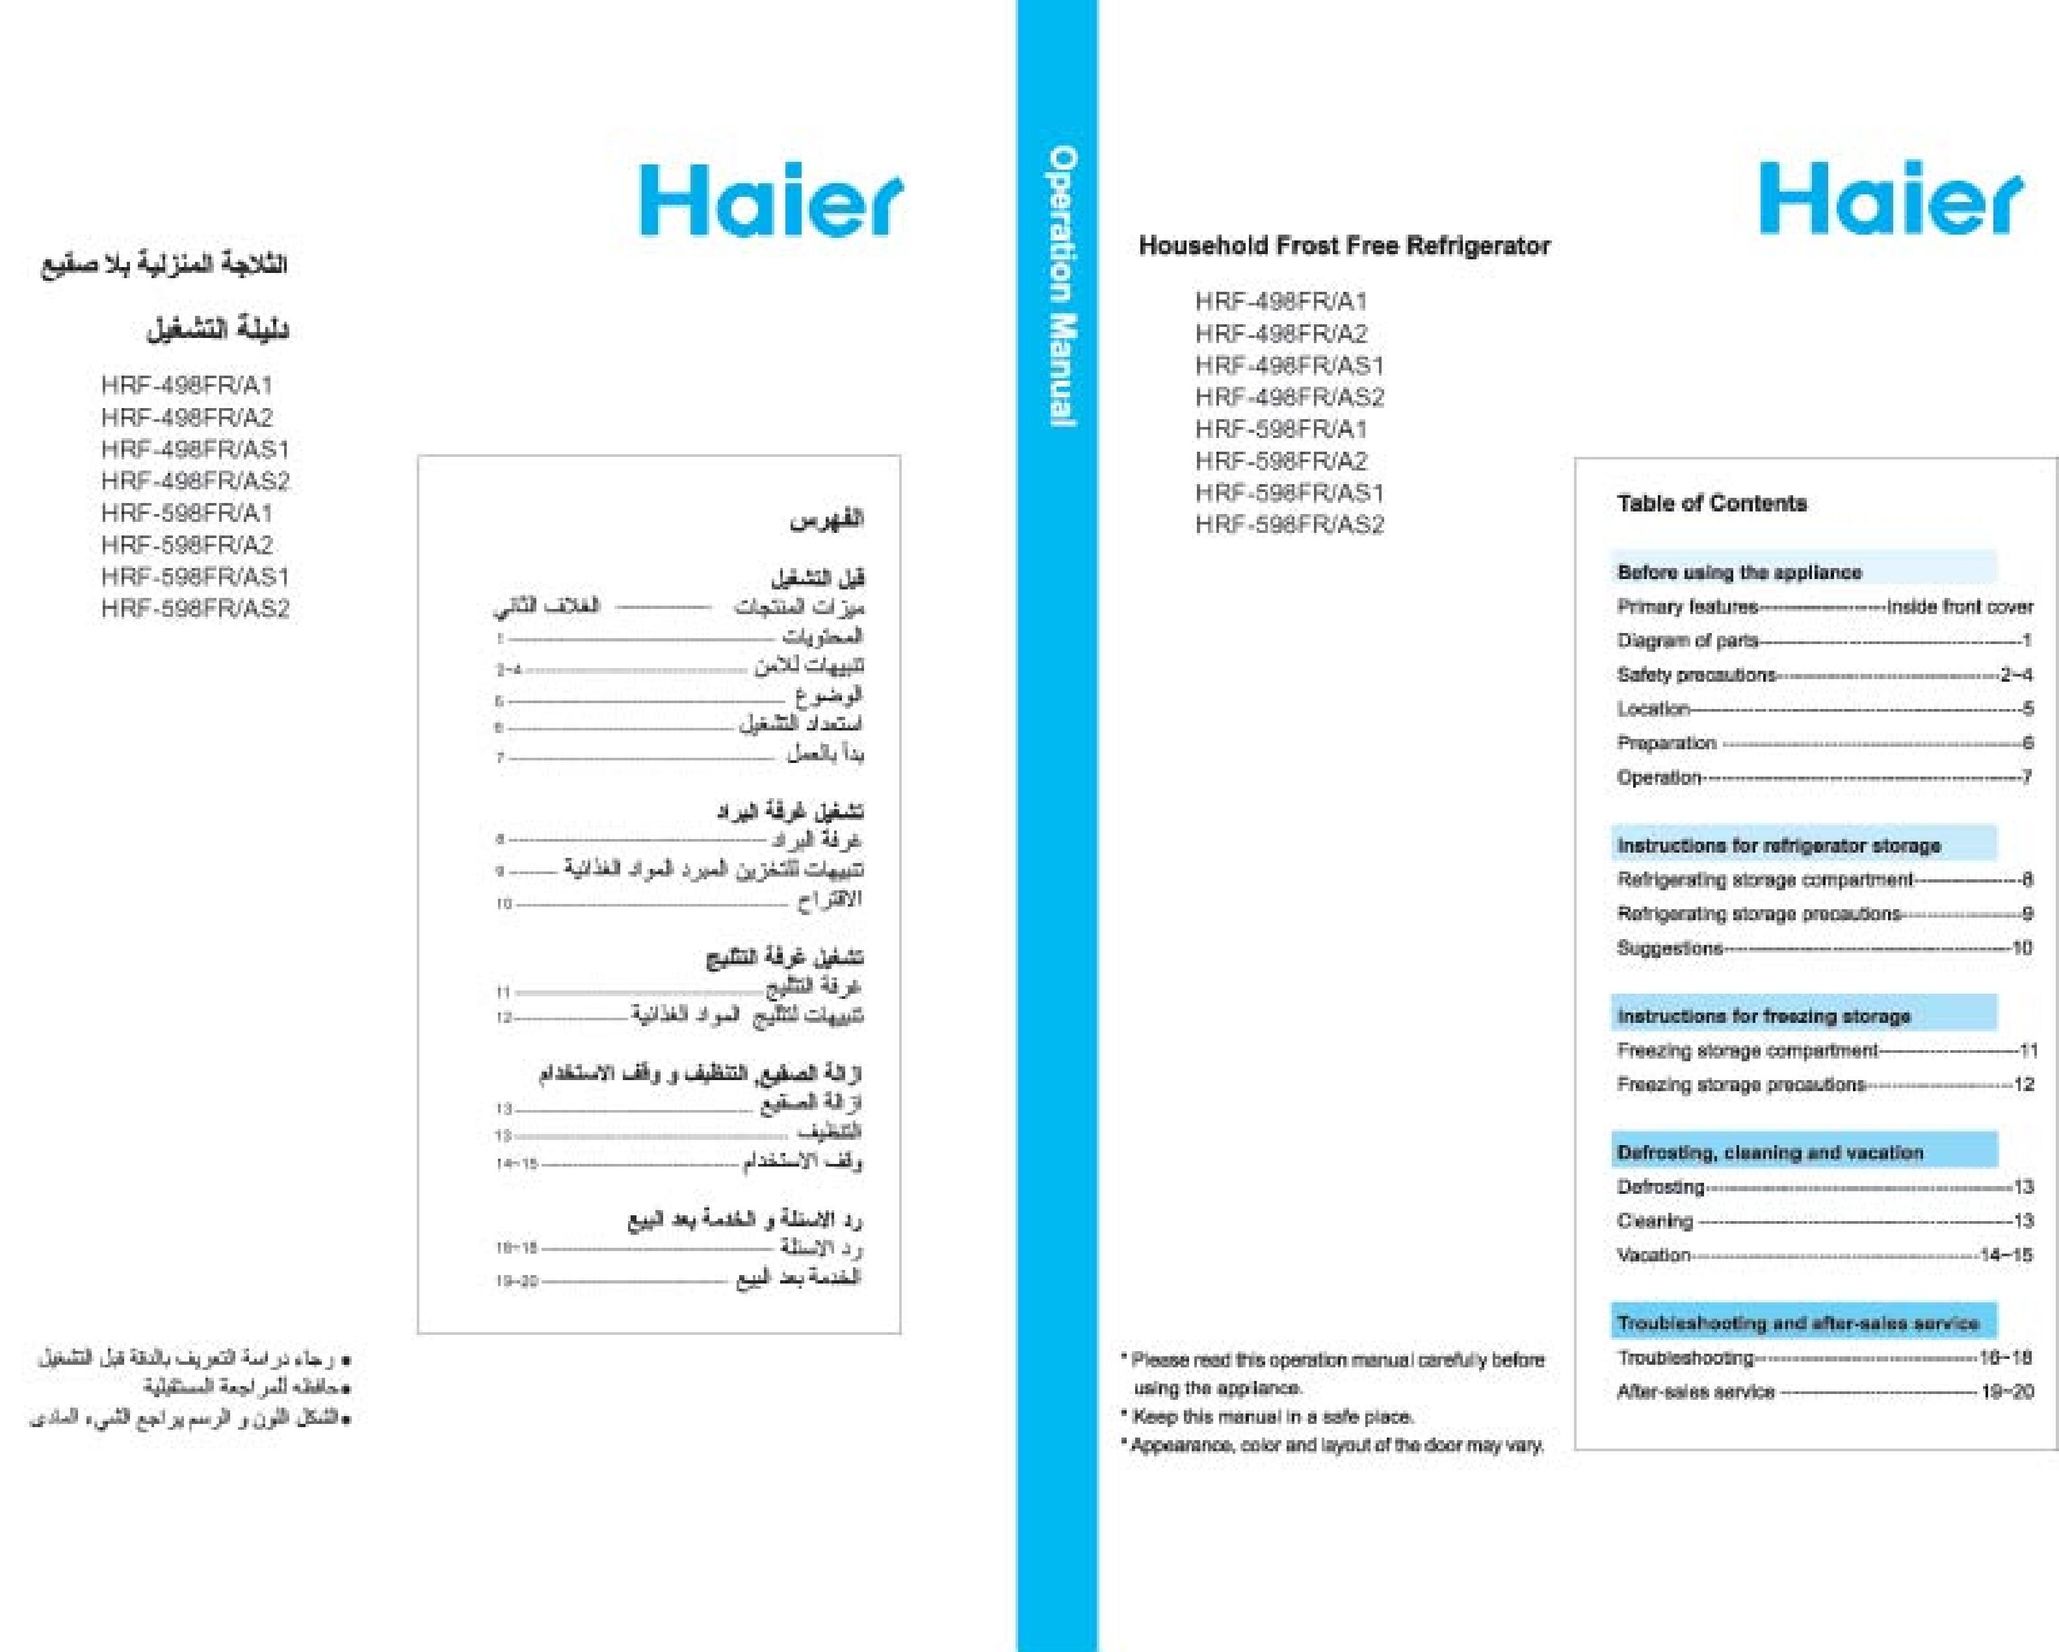 Haier HRF-498FR/AS1 Saw User Manual